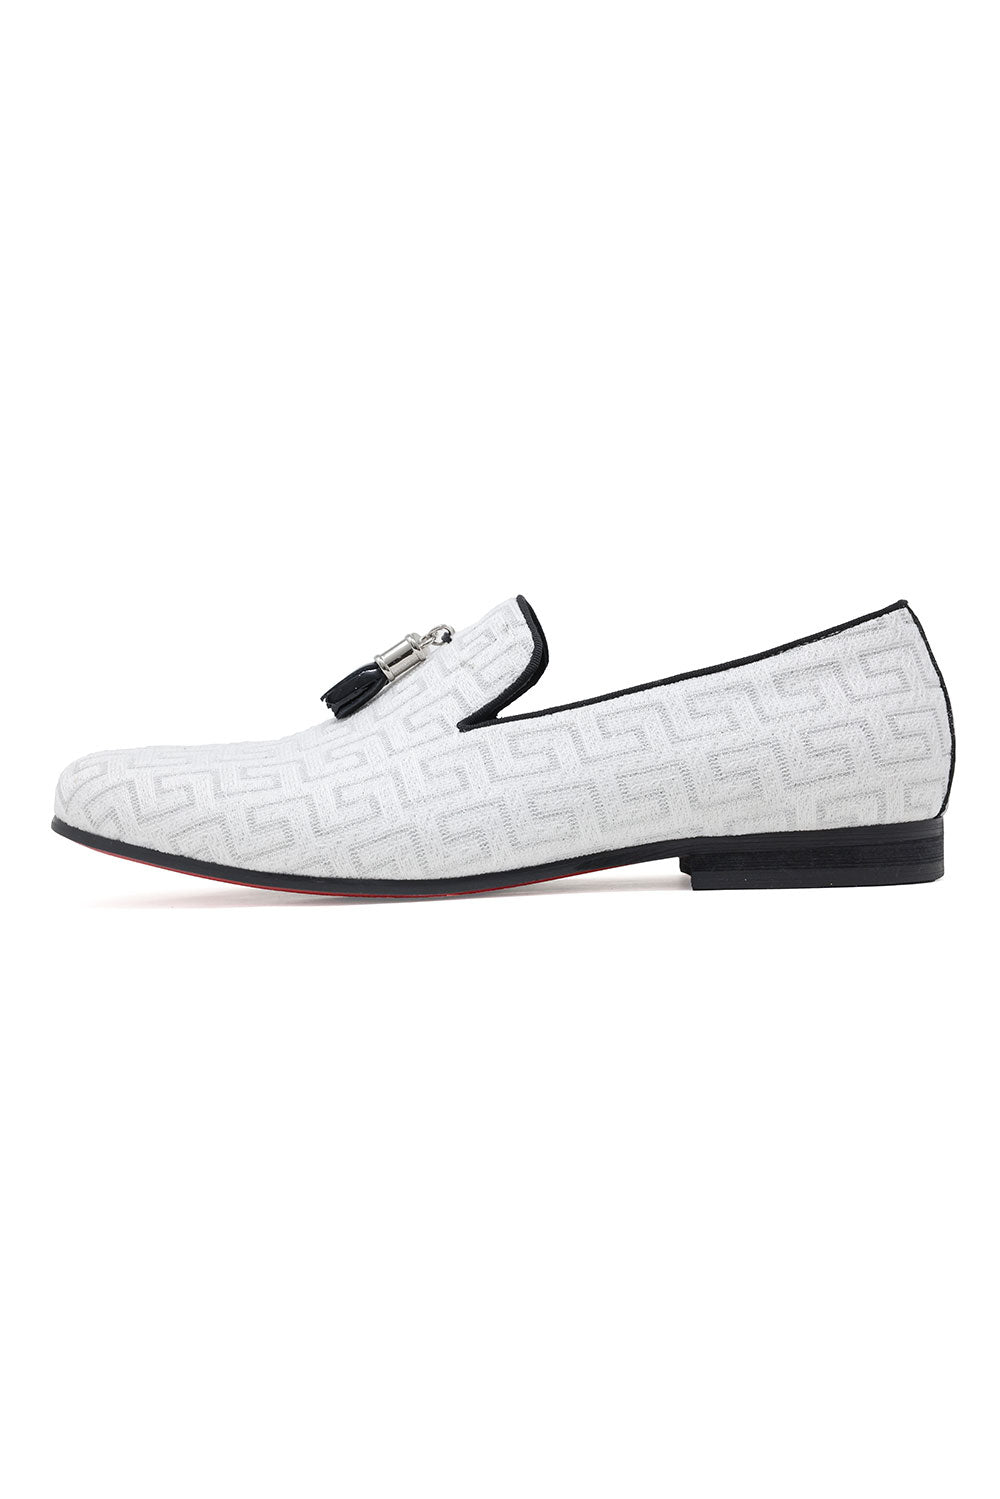 BARABAS Men's Rhinestone Greek key Pattern Tassel Loafer Shoes SH3087 White Silver